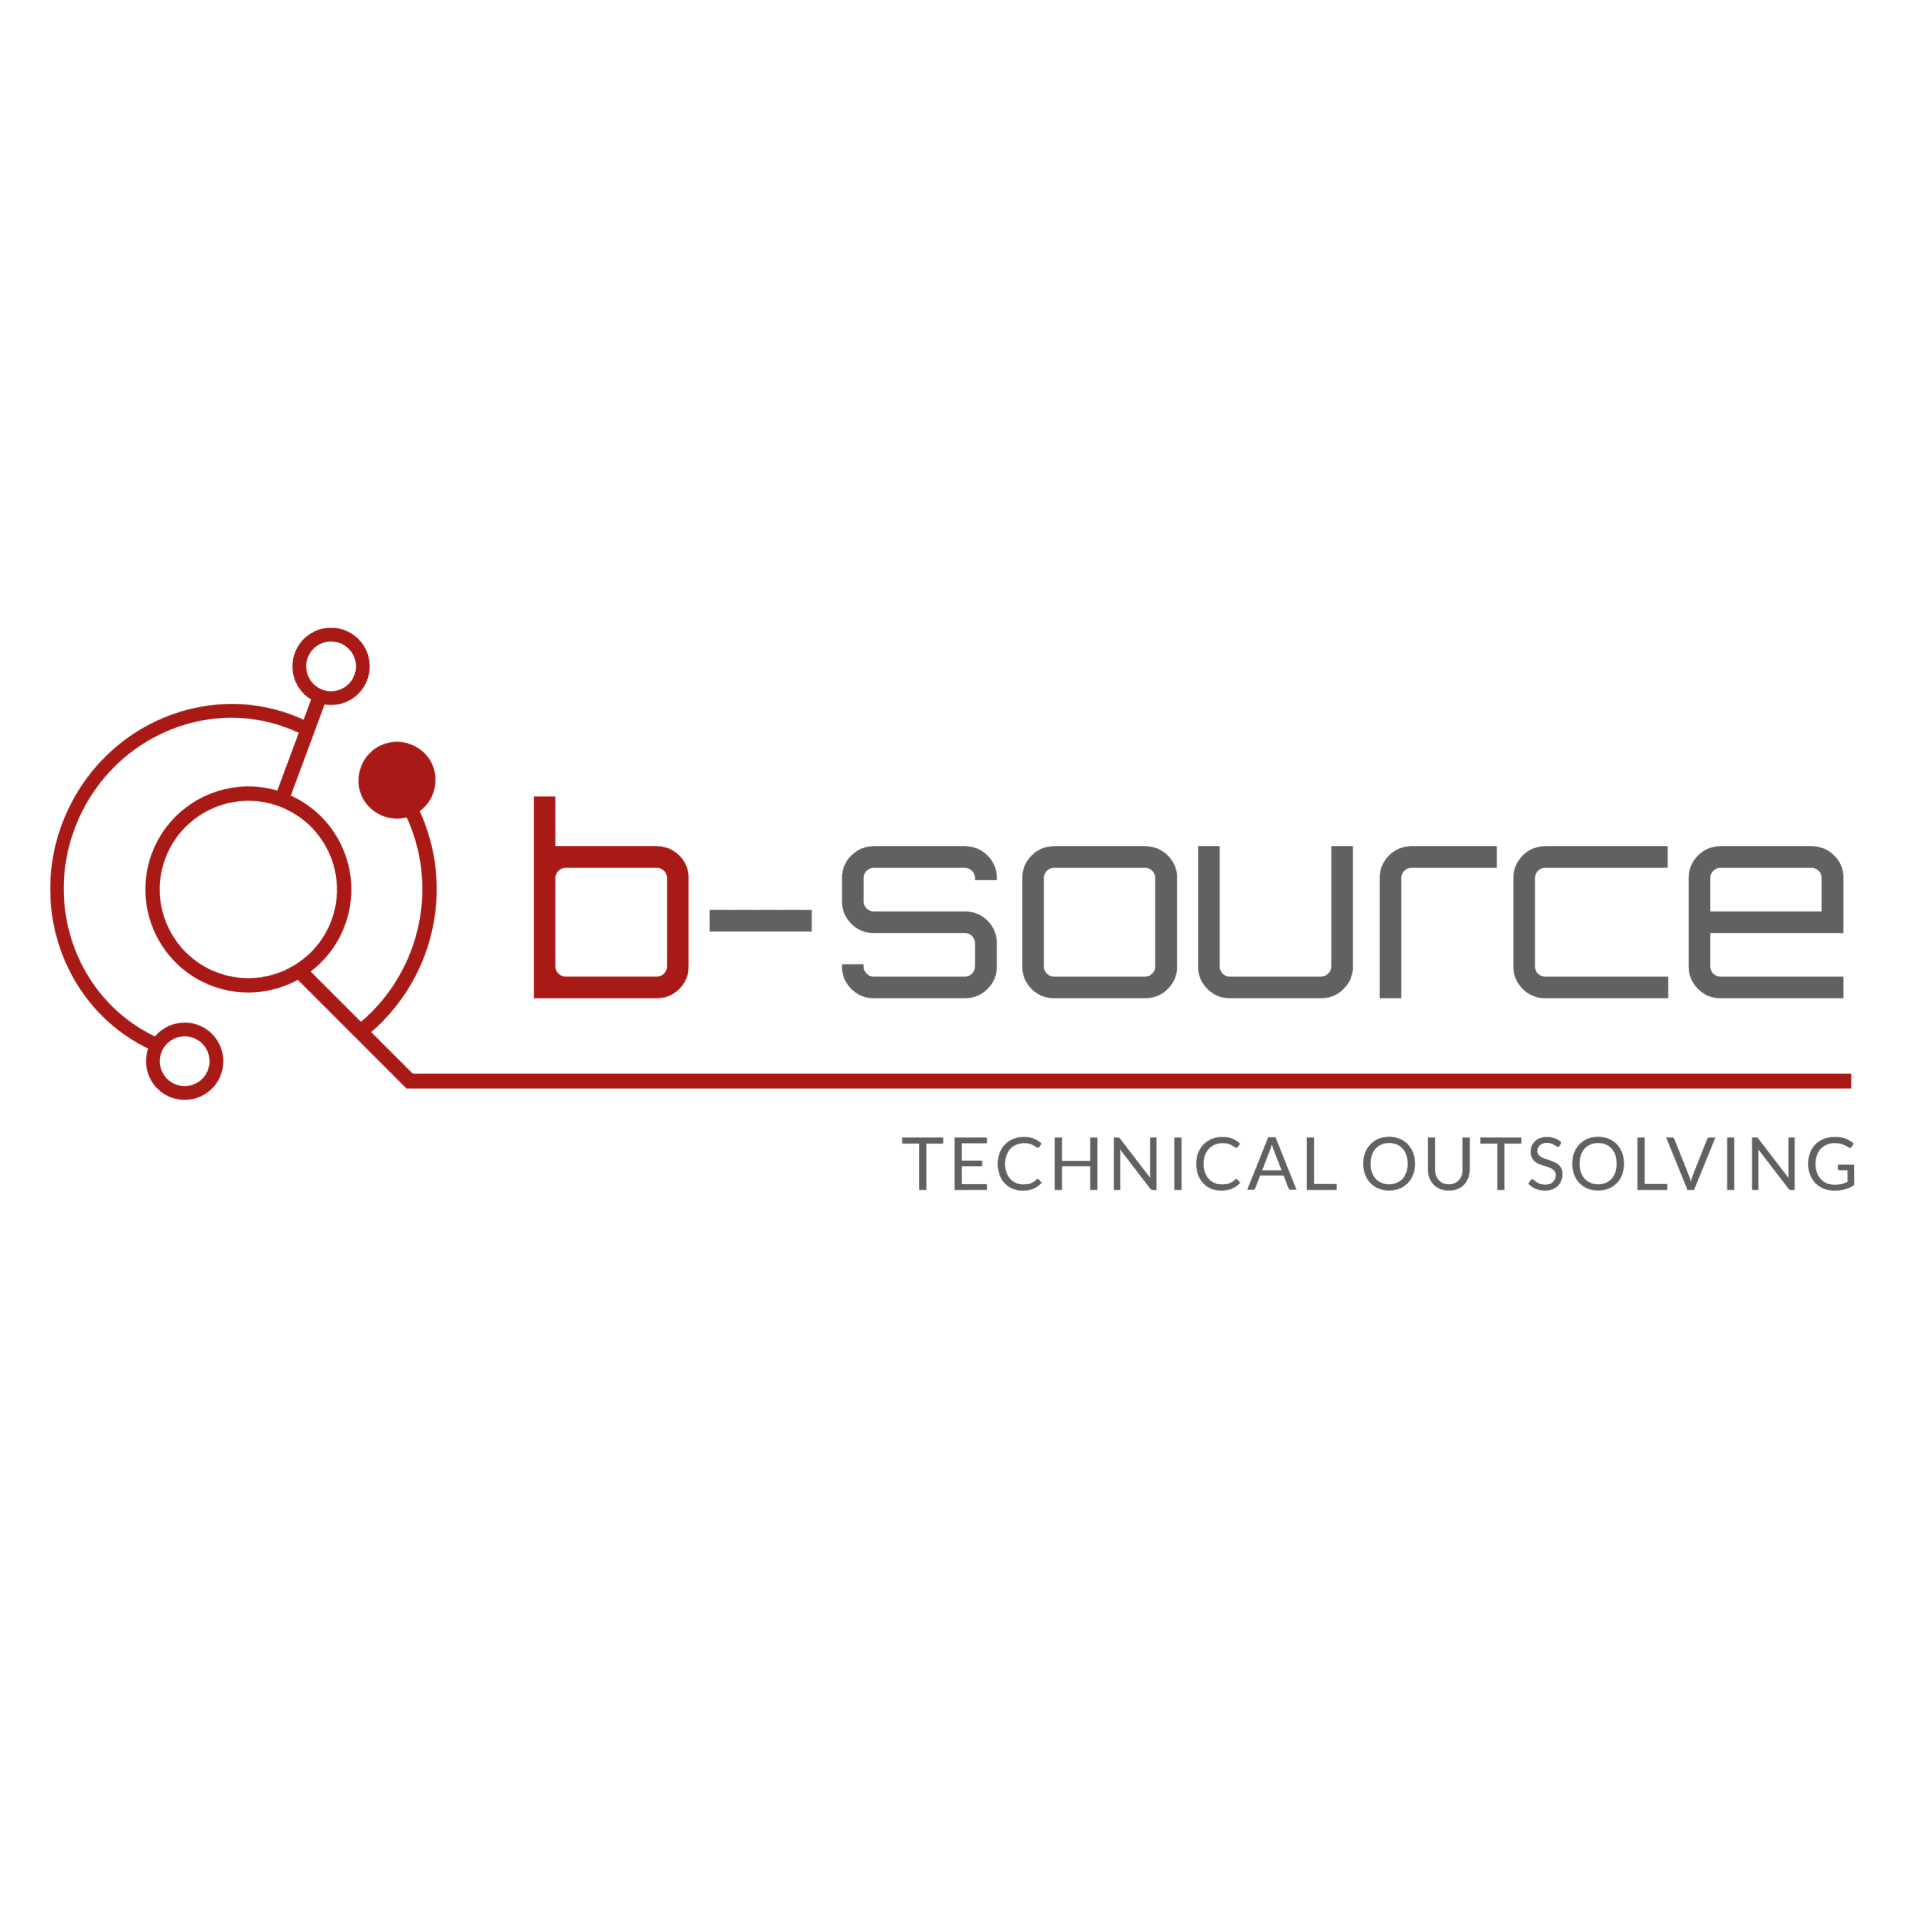 b-source logo